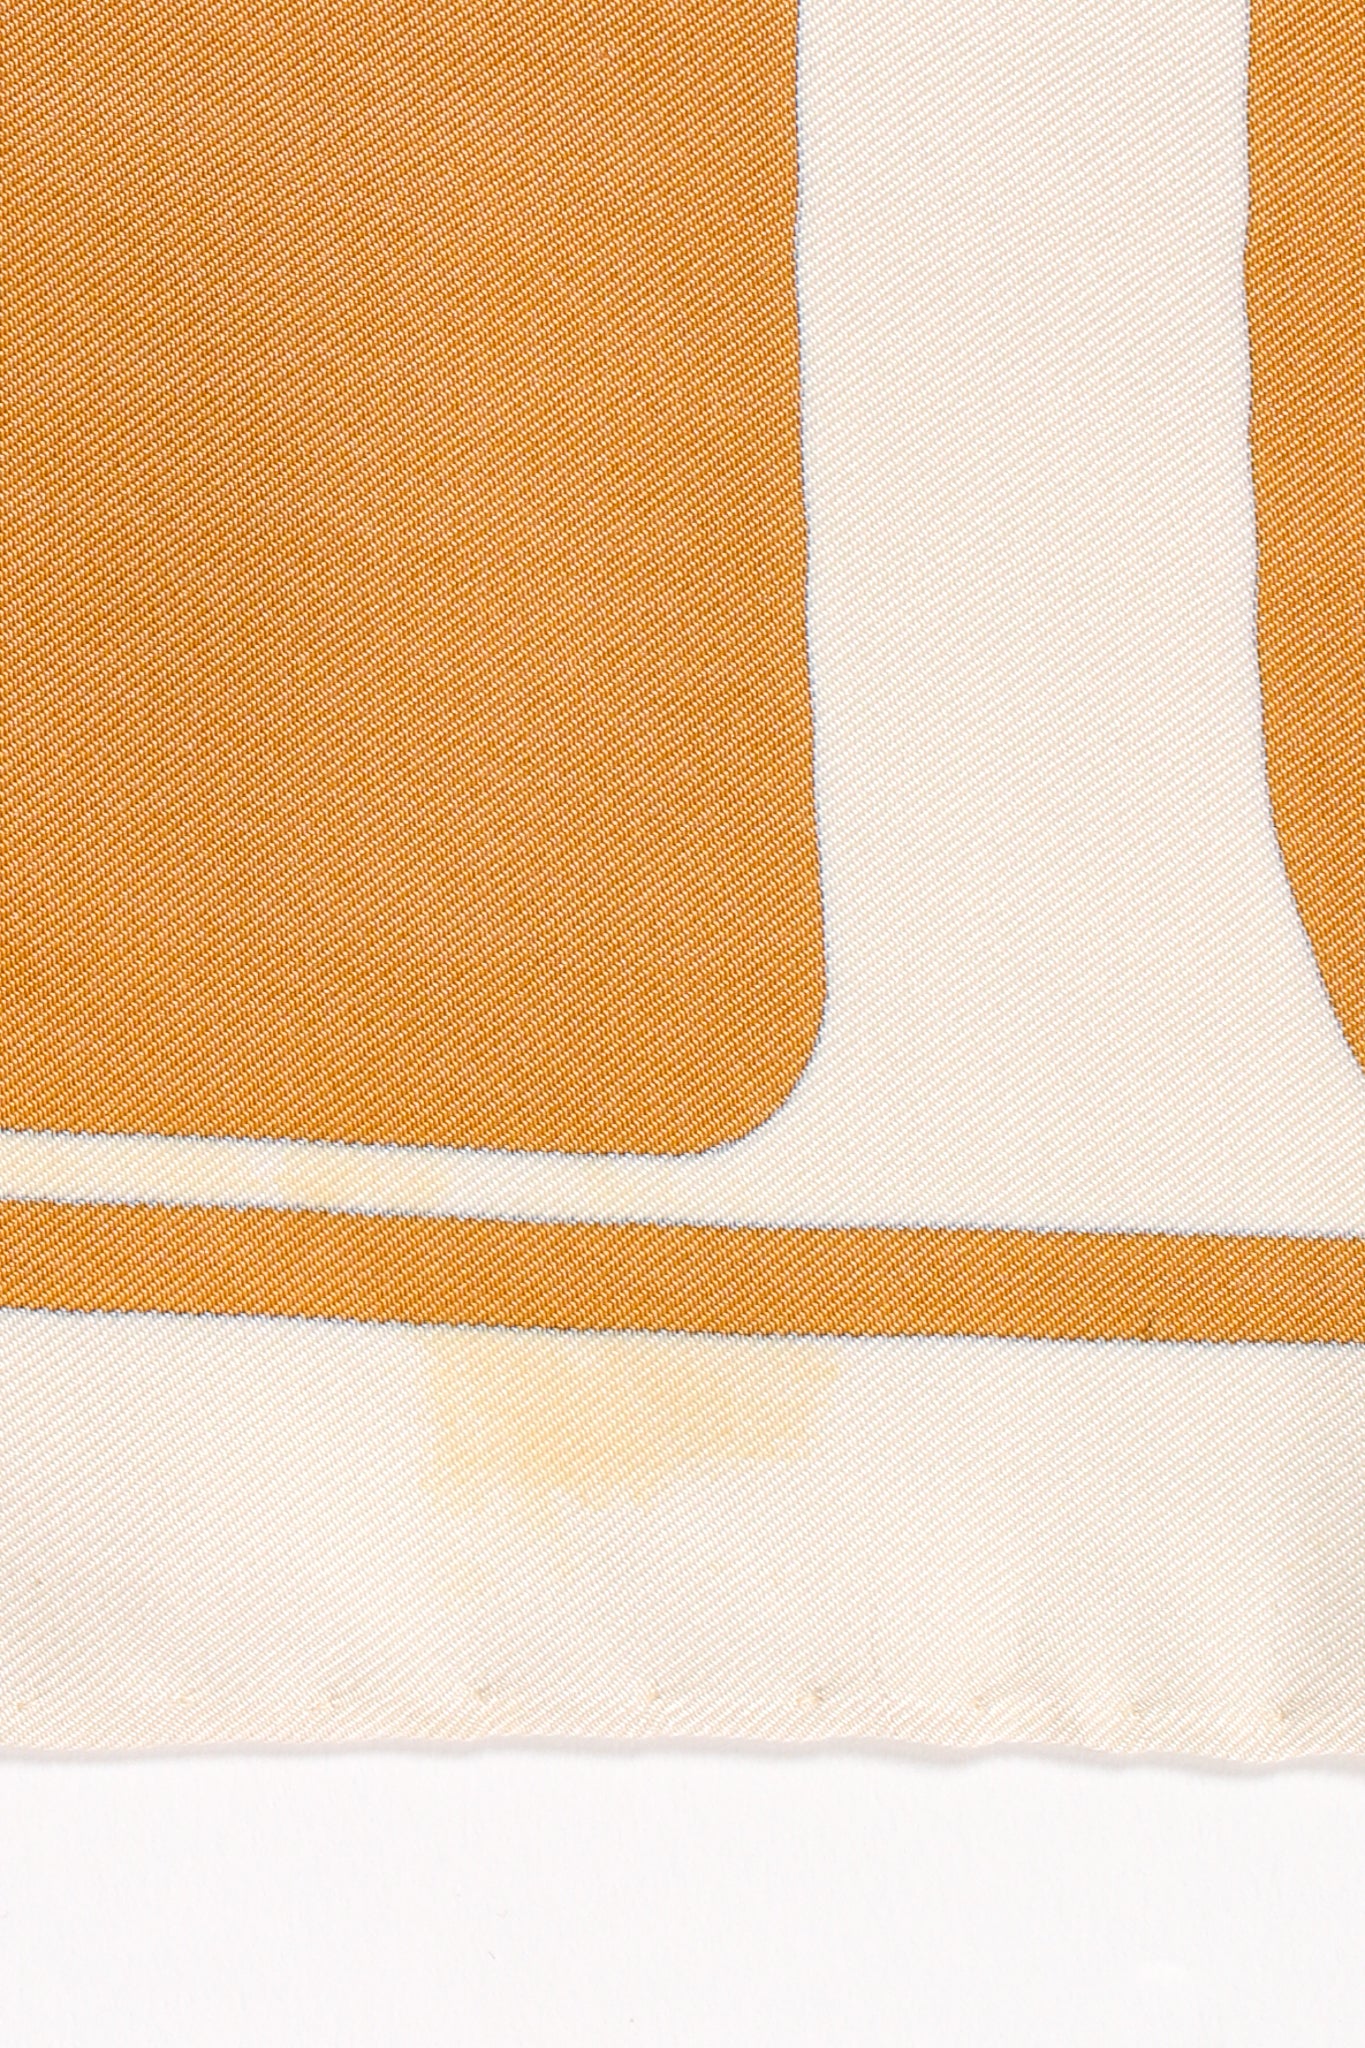 Vintage Christian Dior Colorblock Monogram Silk Scarf stain at Recess Los Angeles